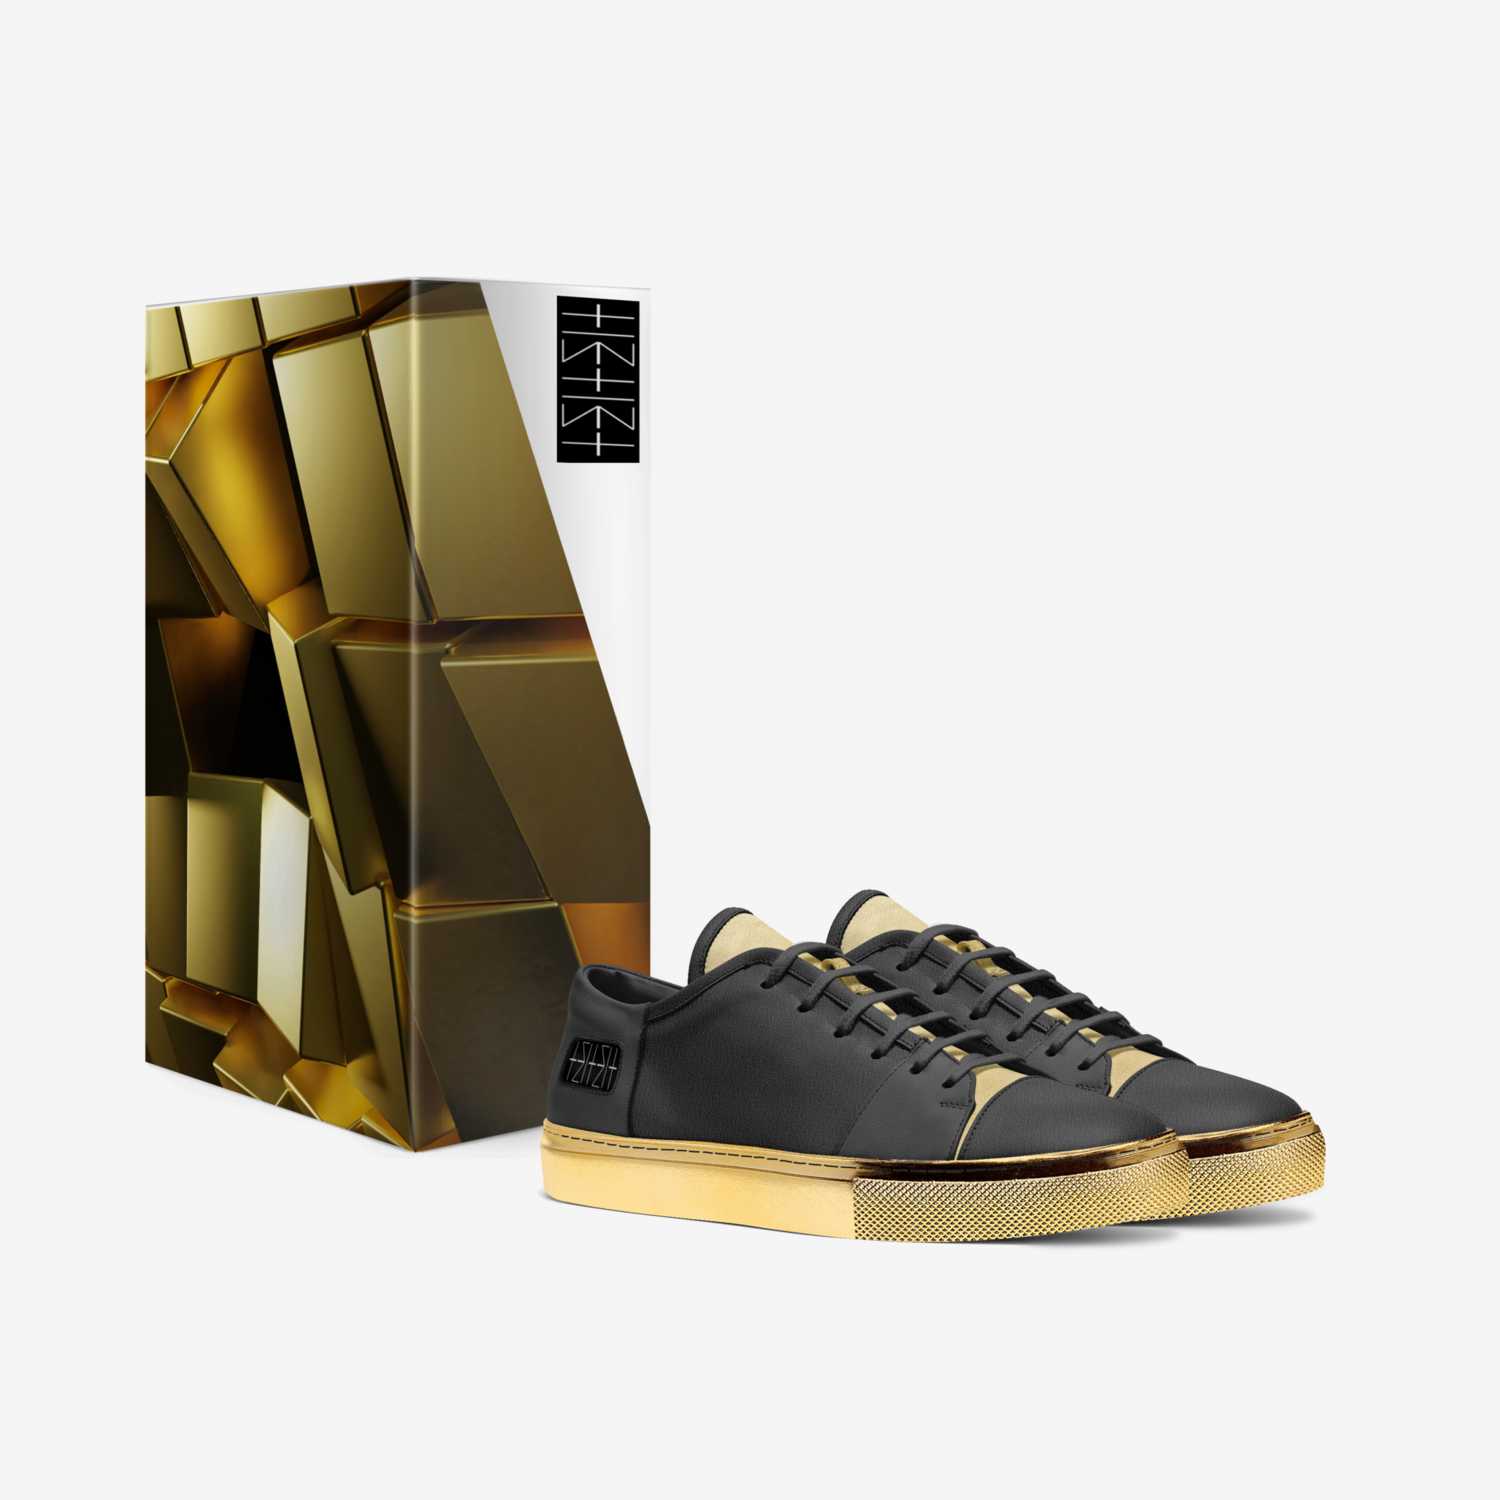 Tzitzit Three custom made in Italy shoes by Ricardo Yoreh Ladino | Box view